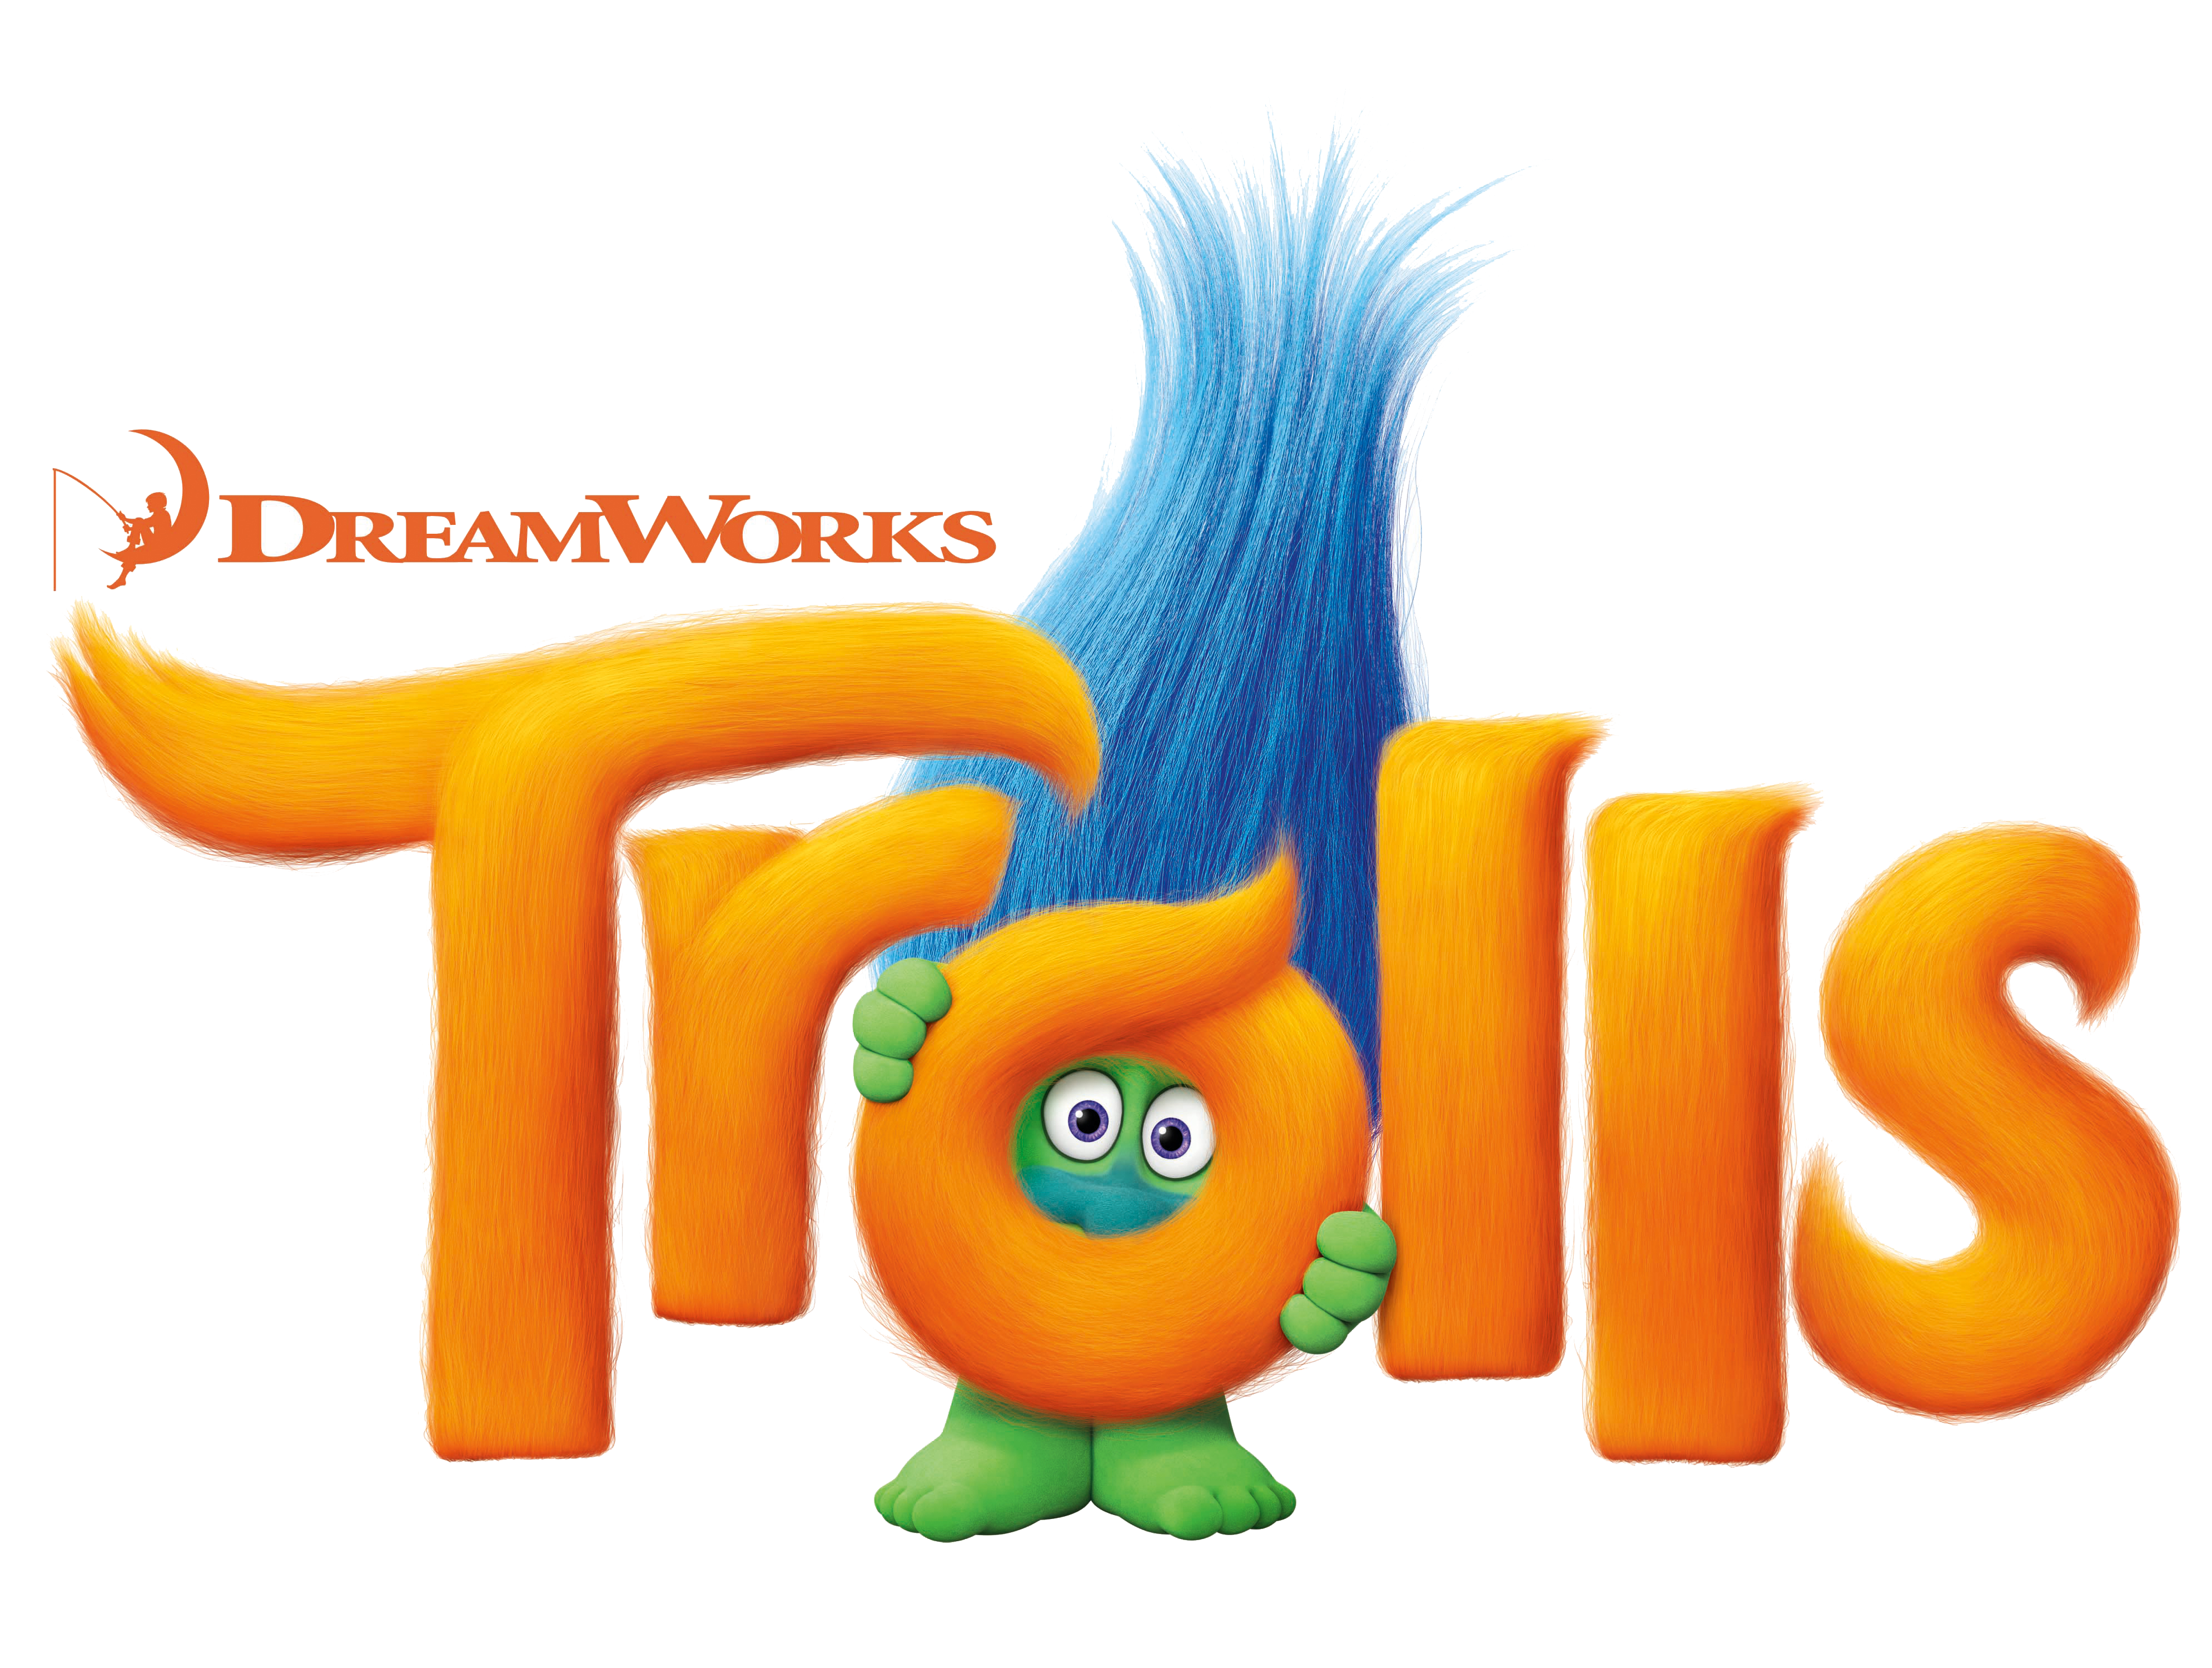 Imagens Trolls logo 01 - Personagens Filme Trolls